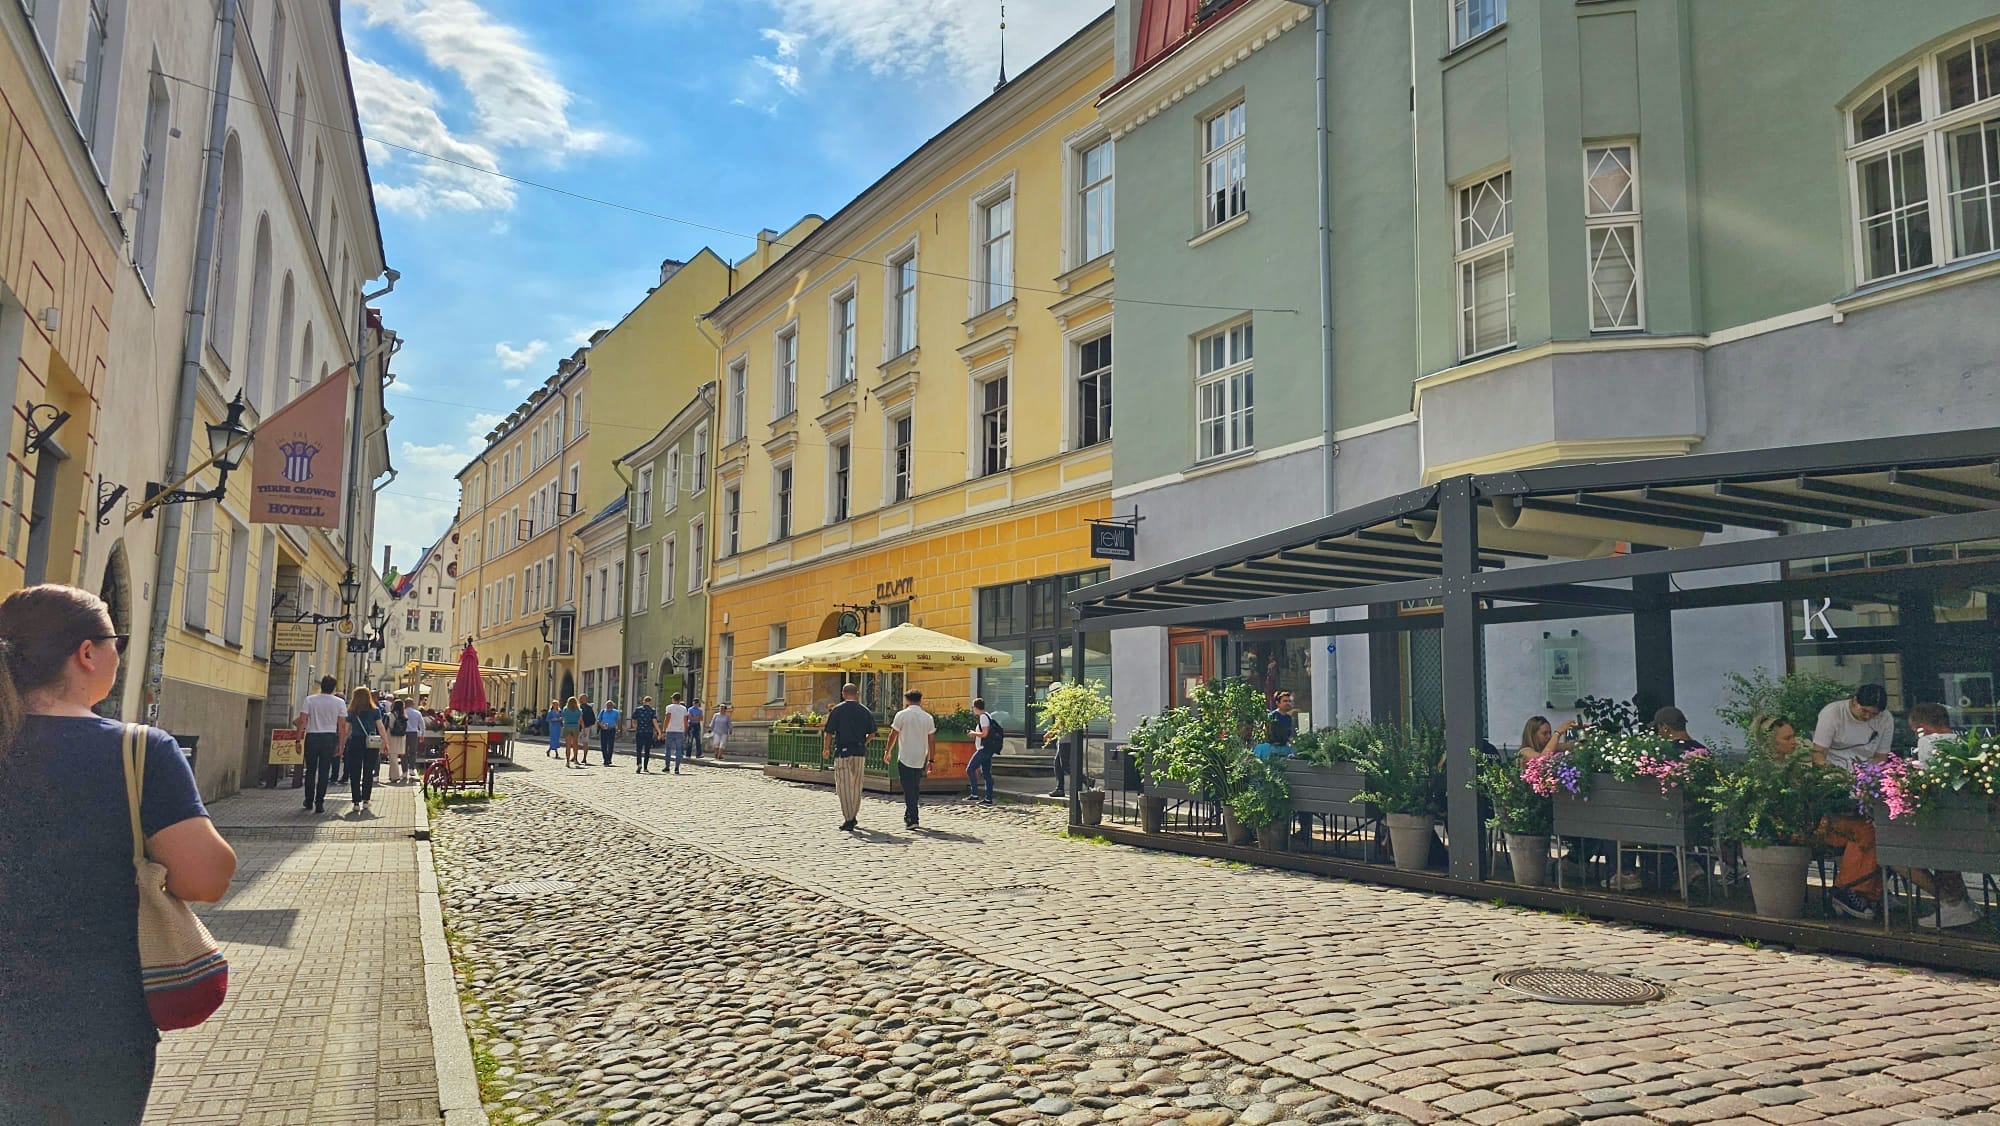 Preserved Old Town - Tallinn, Estonia